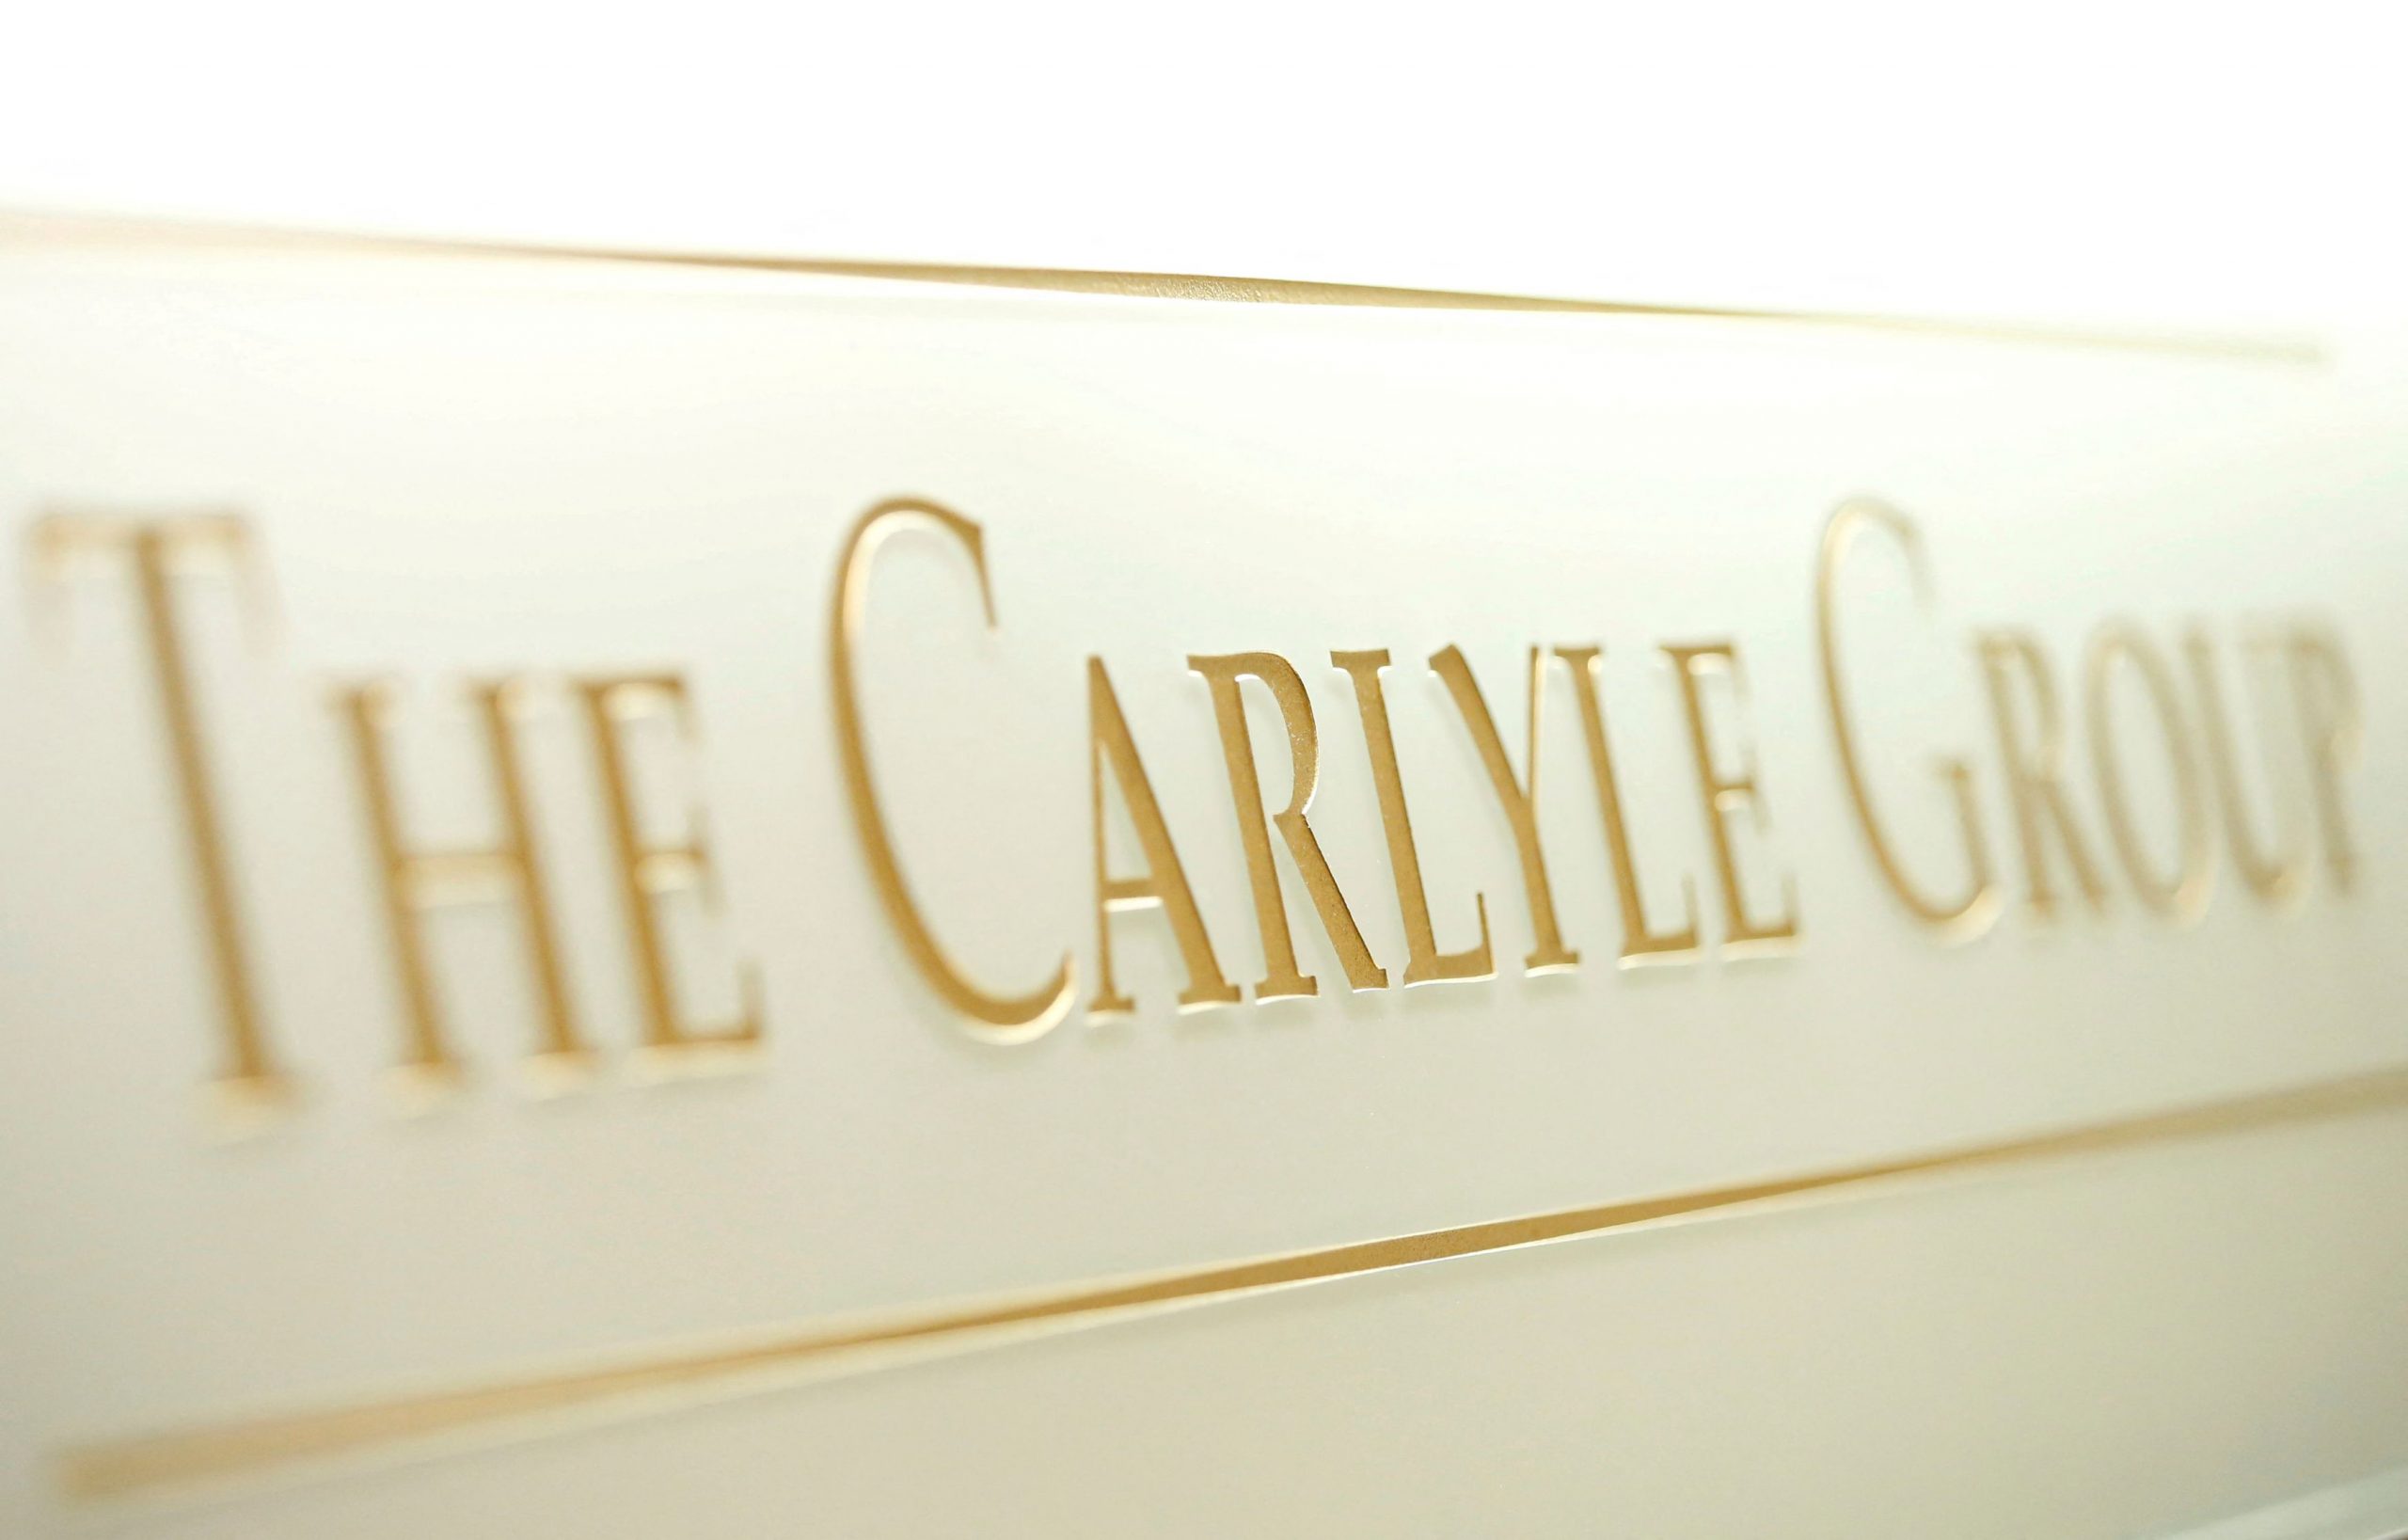 Carlyle: Ο νέος CEO Χάρβεϊ Σβαρτς θα λάβει αμοιβή 180 εκατ. δολαρίων